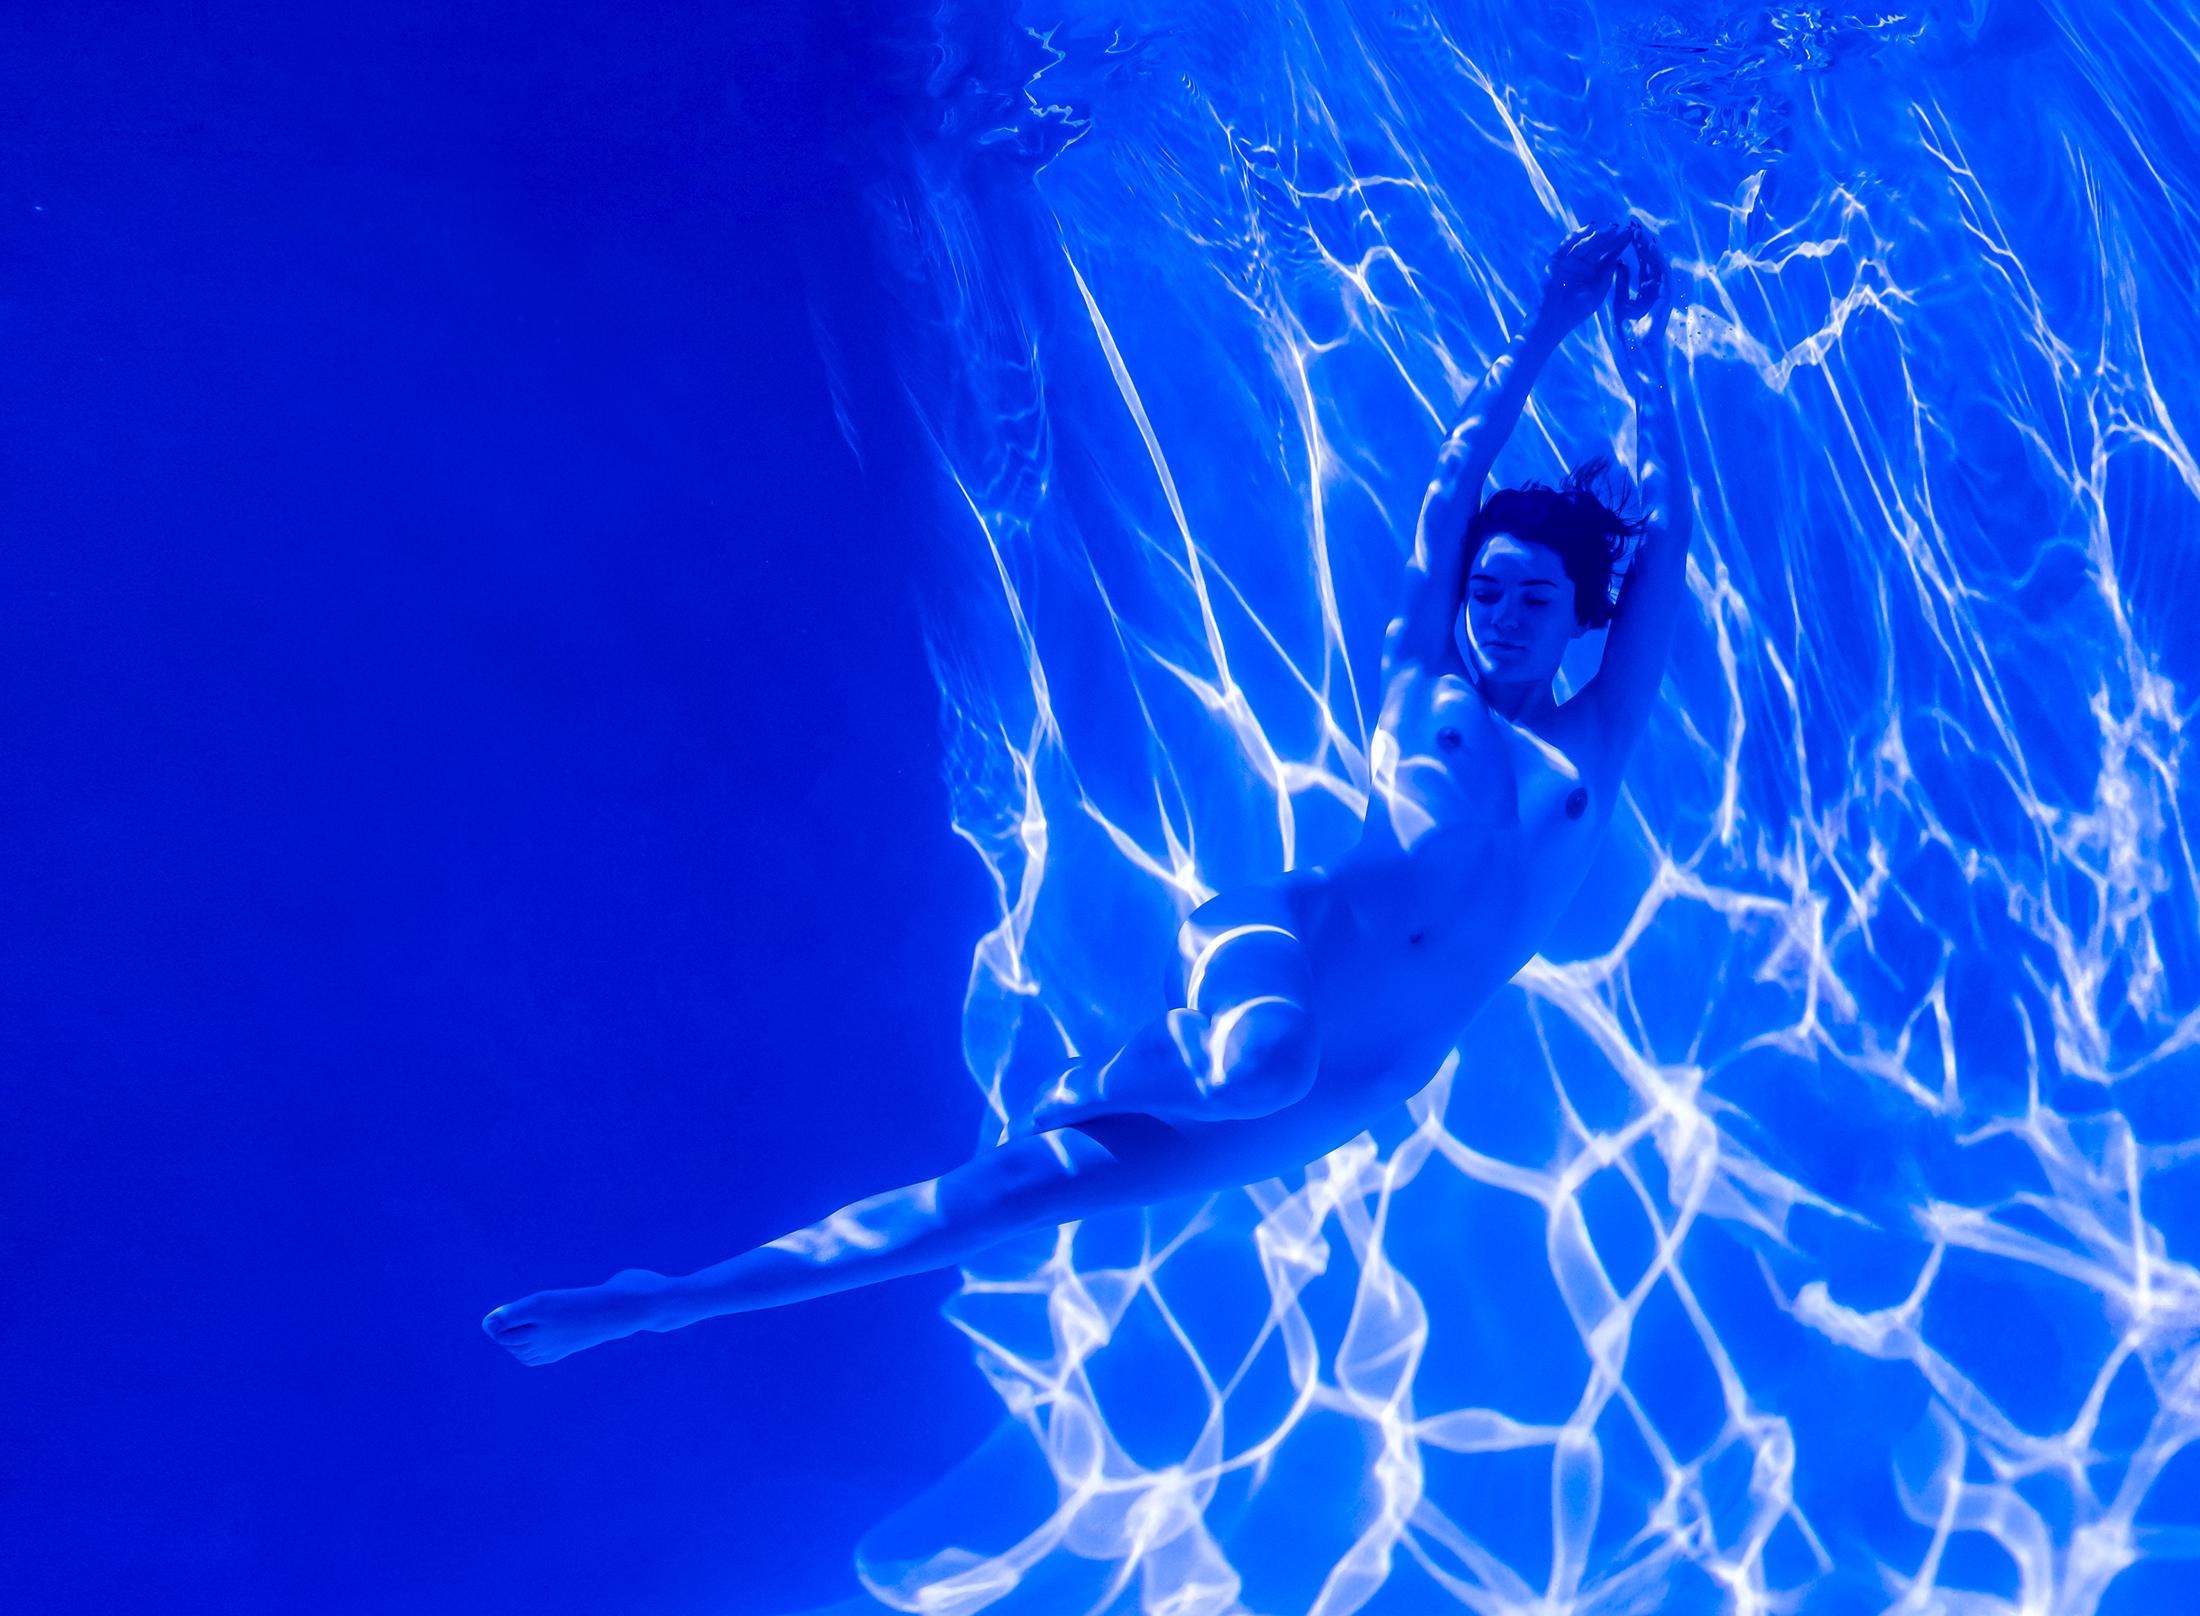 Alex Sher Nude Photograph - Fluorescence - underwater nude photograph - archival pigment print 18" x 24"